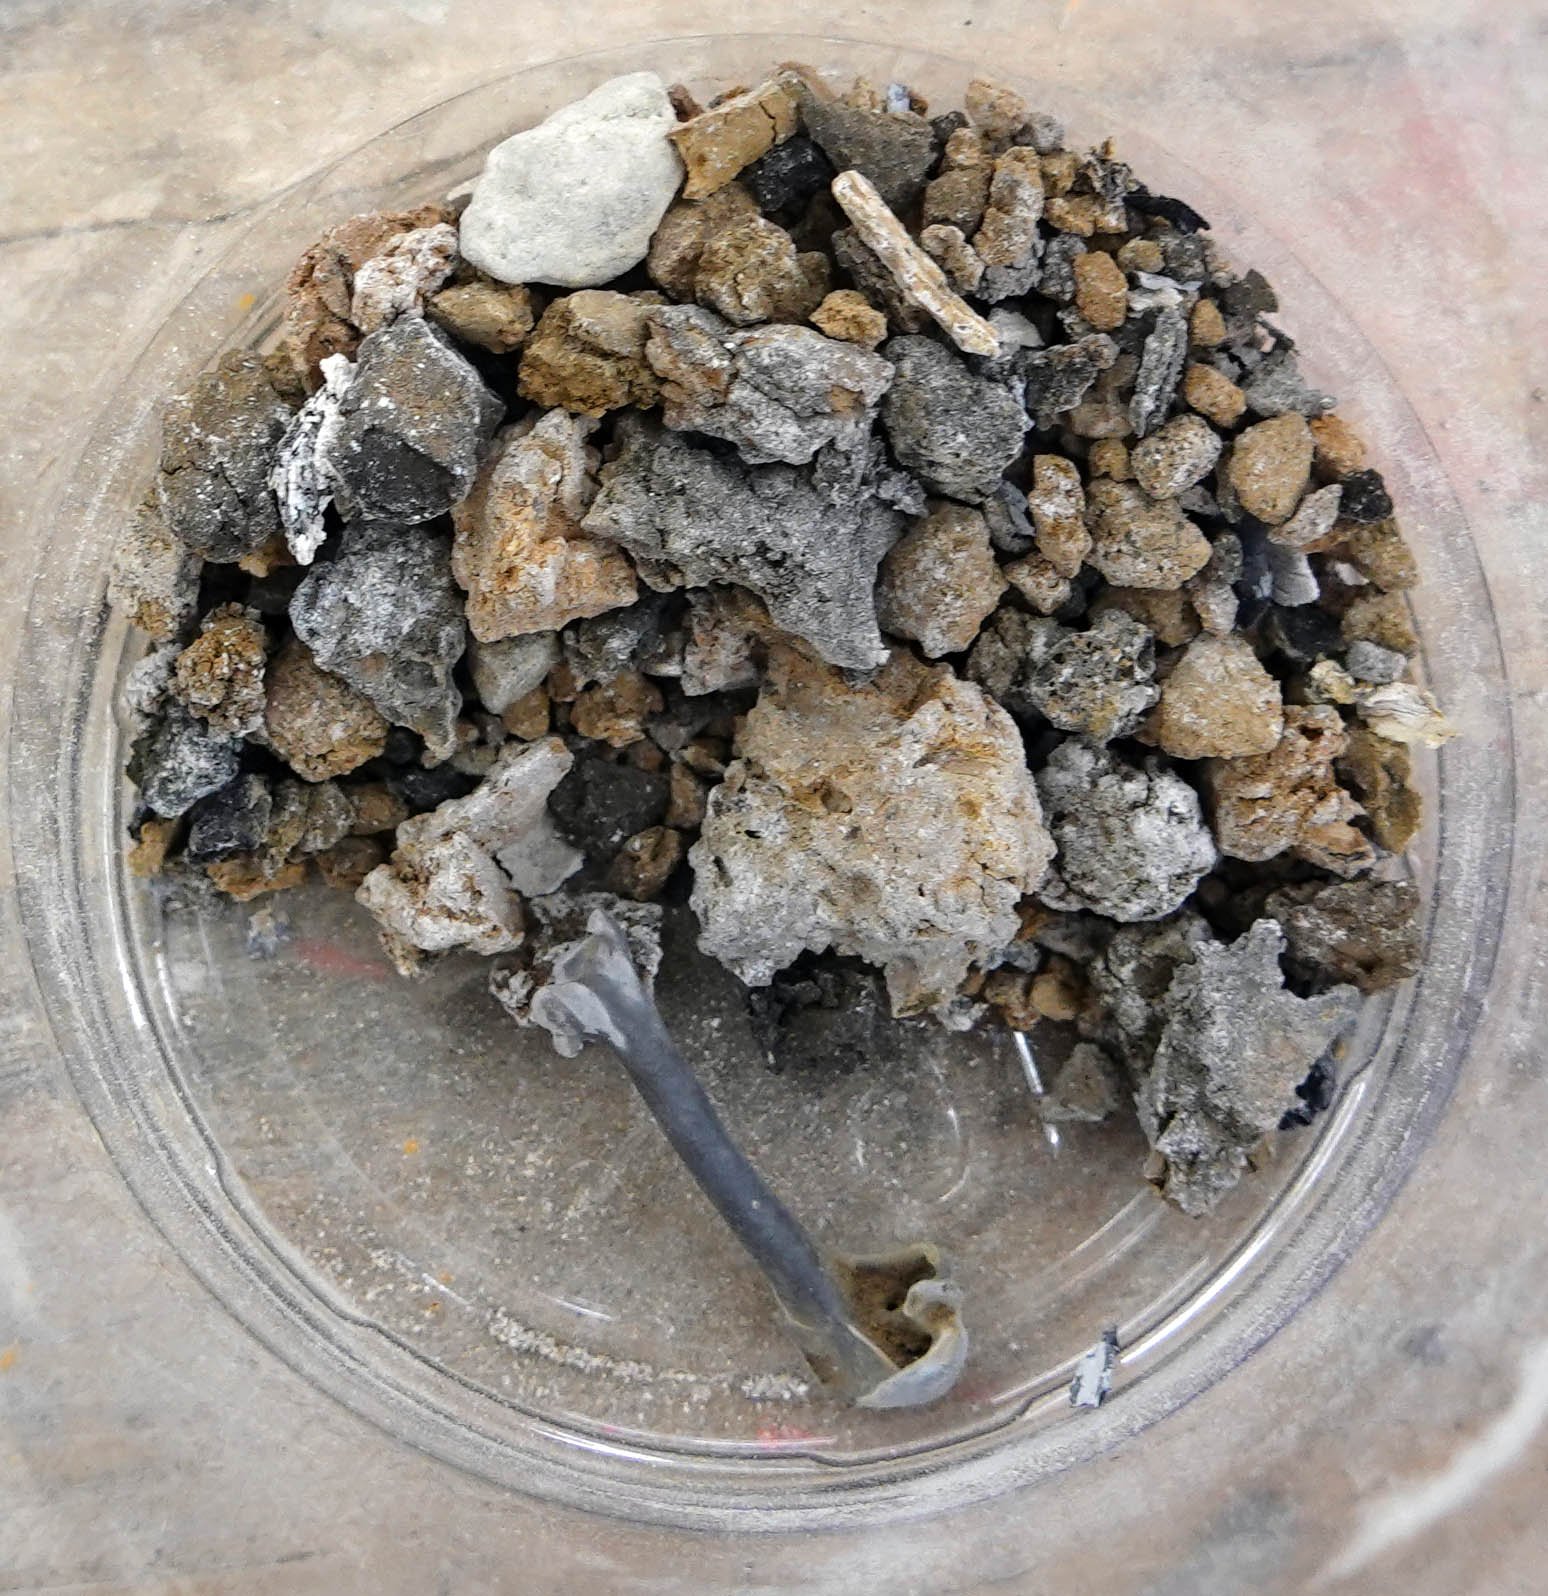 landfill ash chunks.jpg